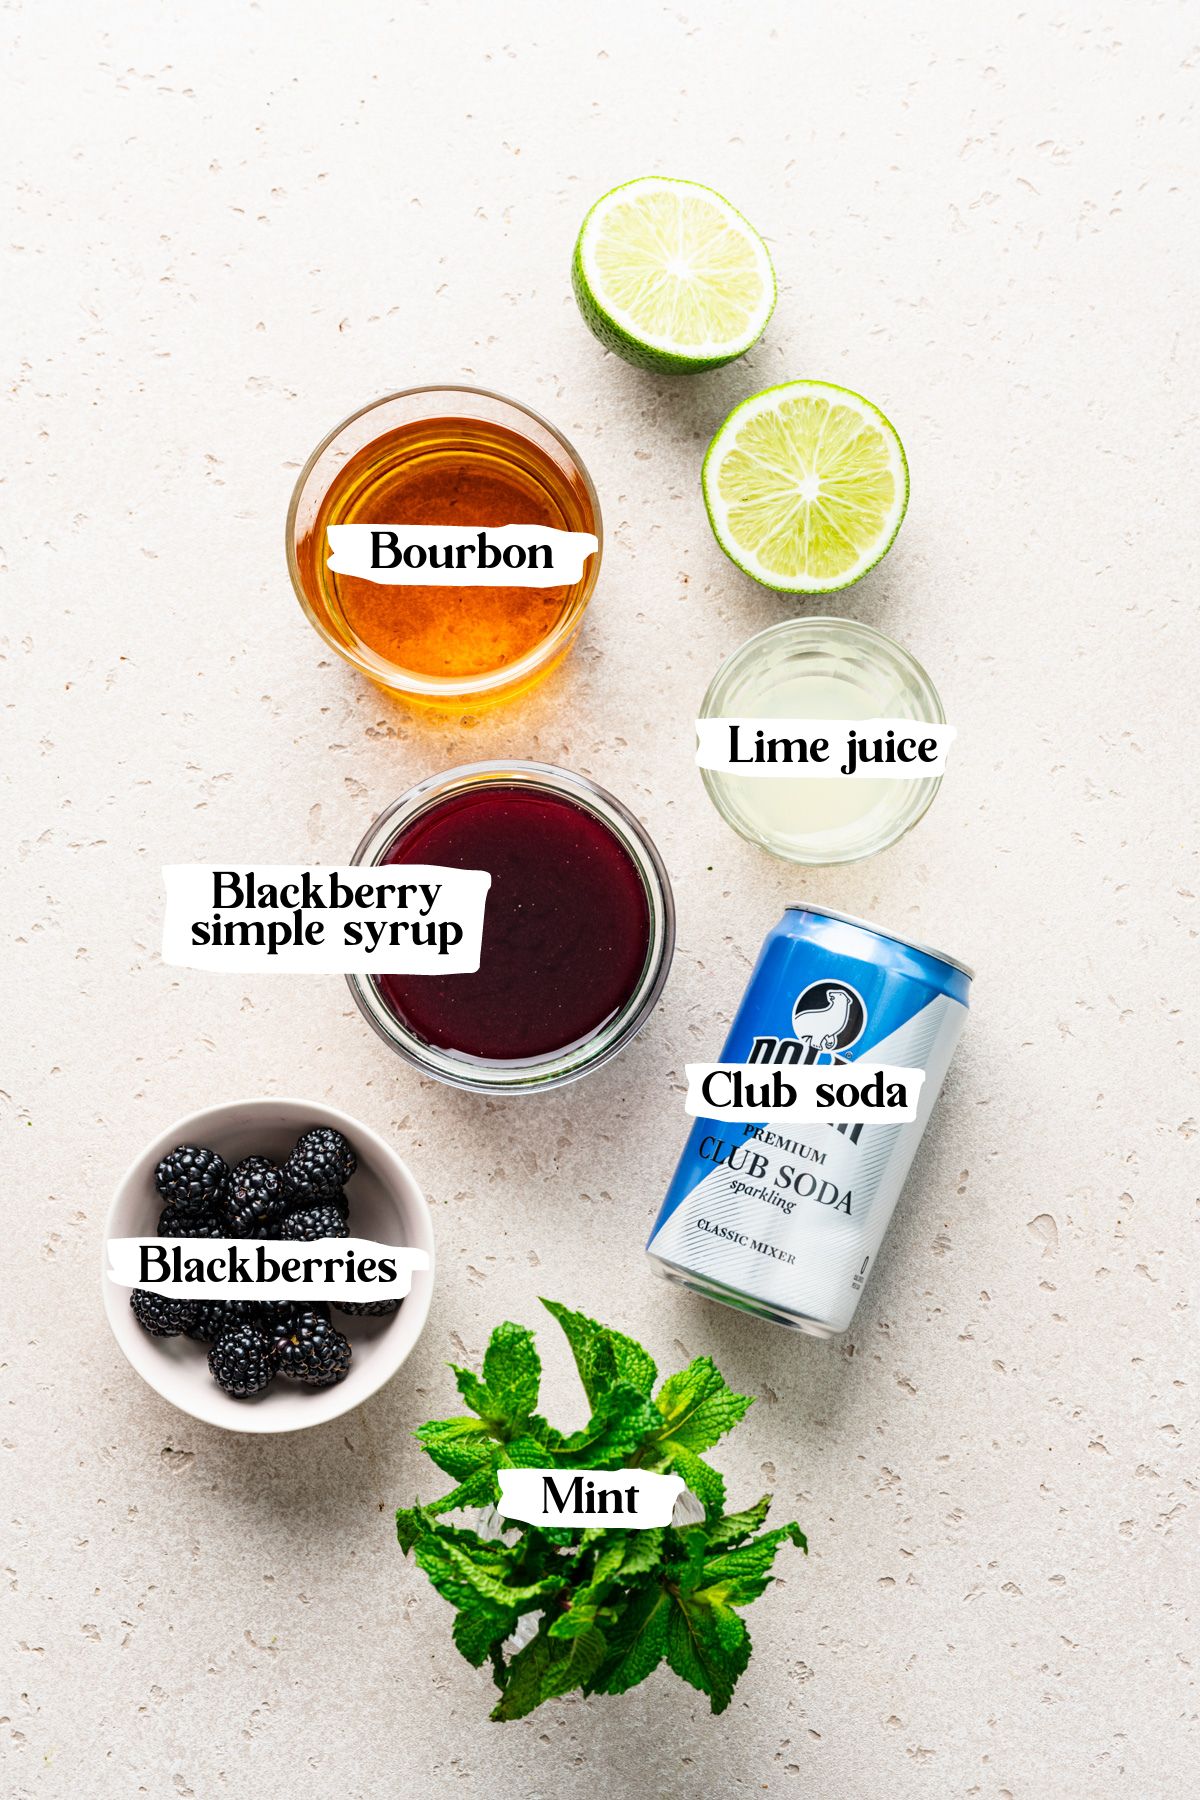 Blackberry bourbon smash ingredients including lime juice and blackberries.